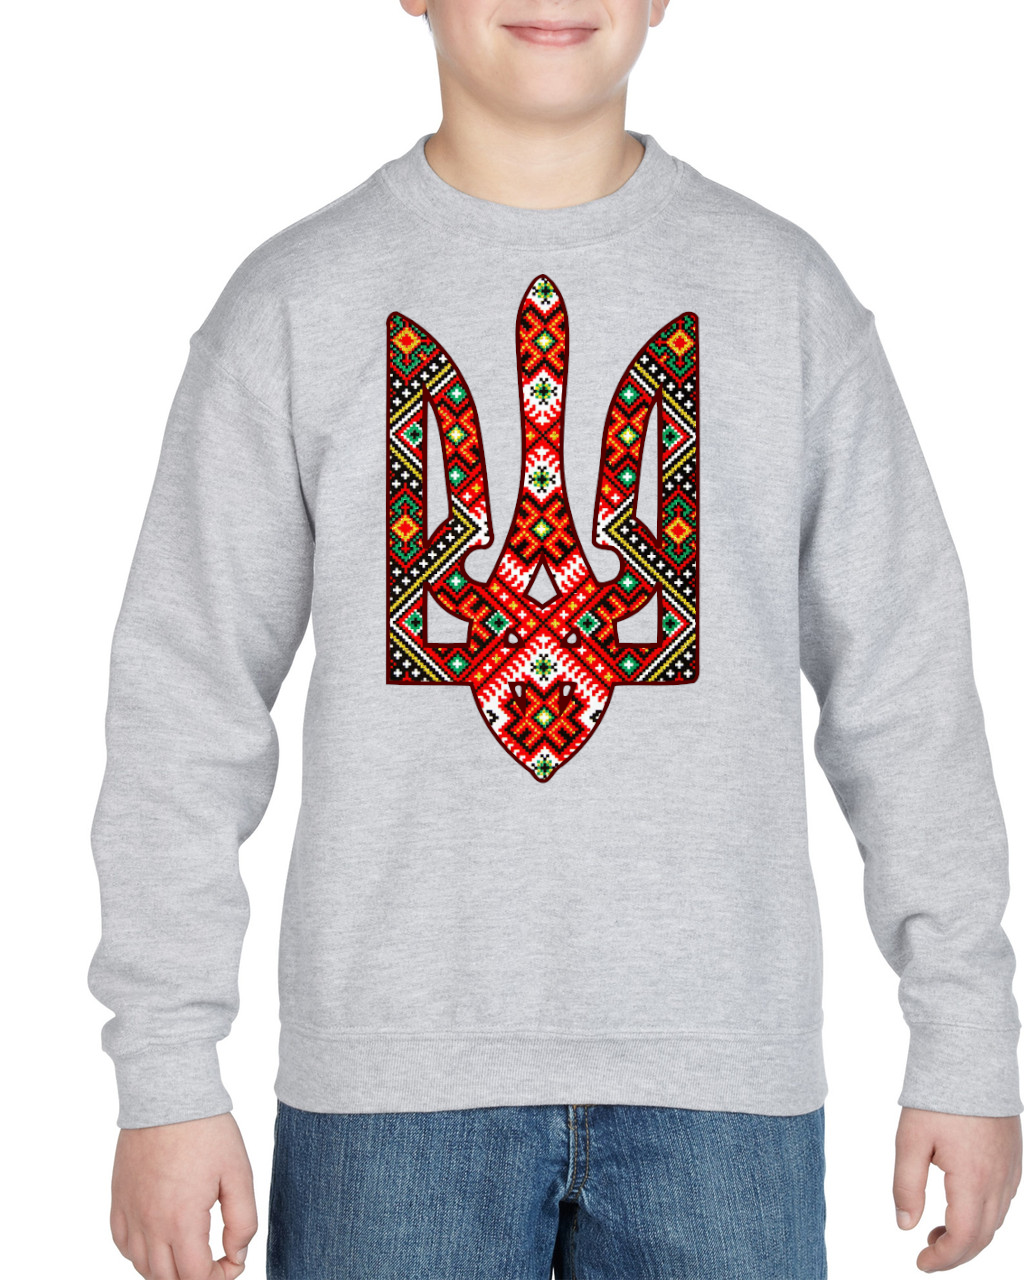 Kids' sweatshirt "Etno Tryzub"